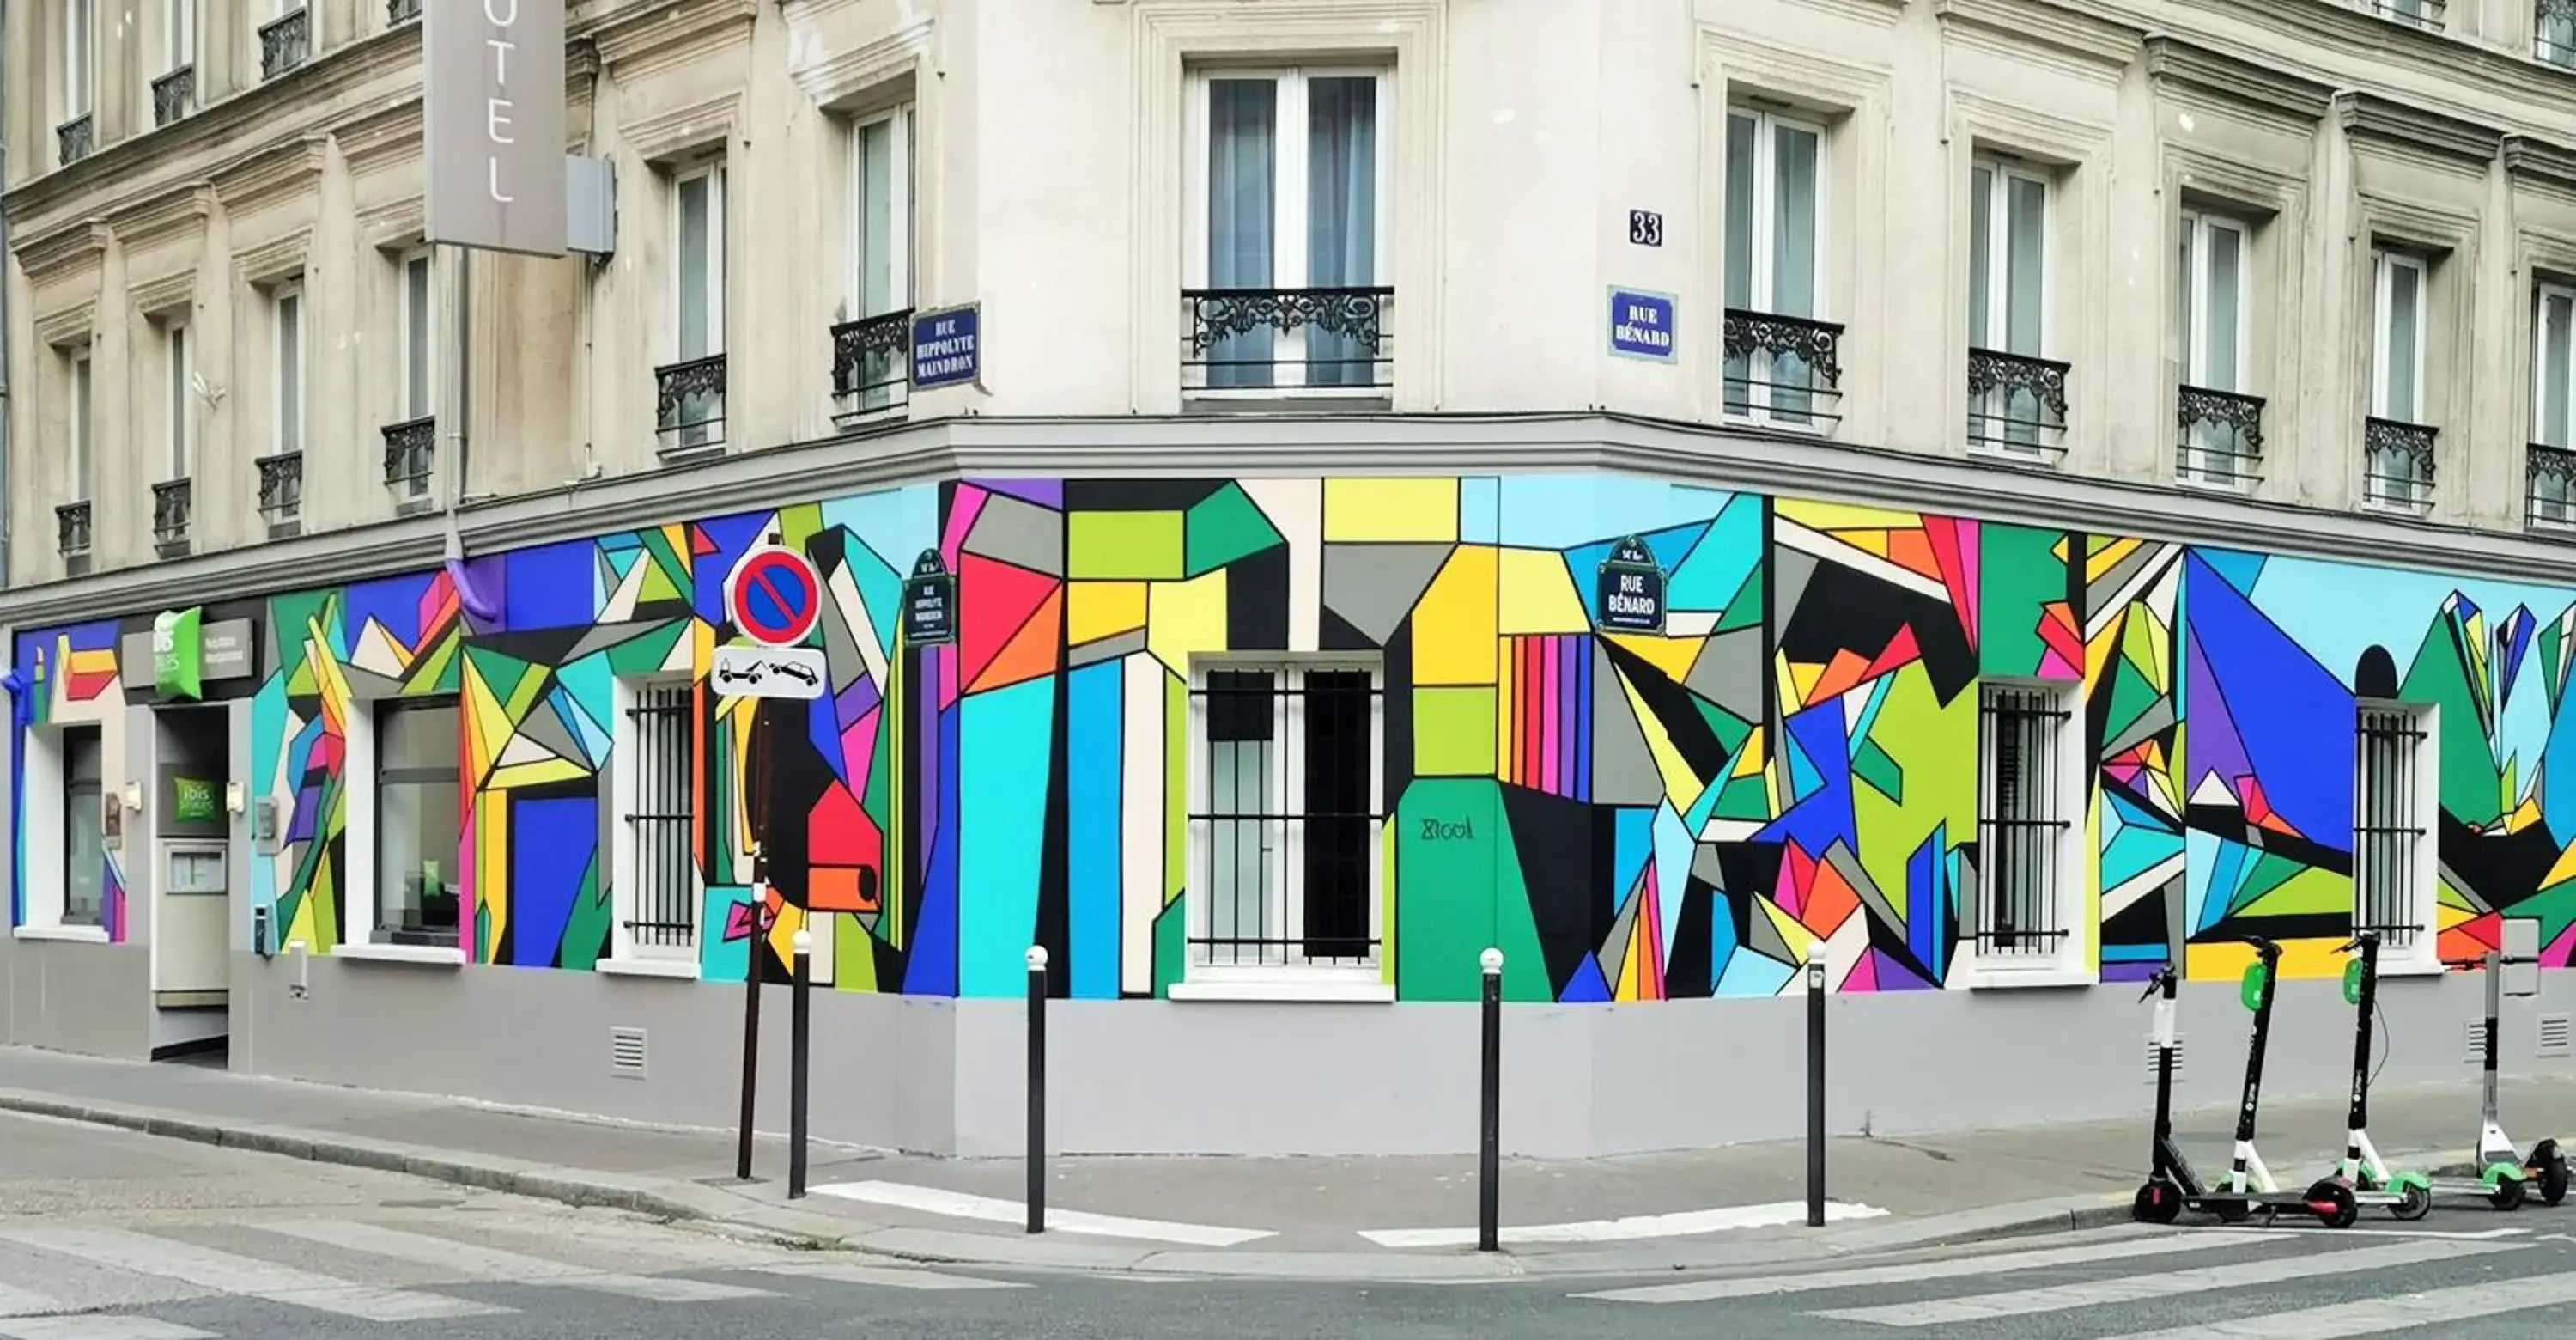 Facade/entrance in Ibis Styles Paris Maine Montparnasse